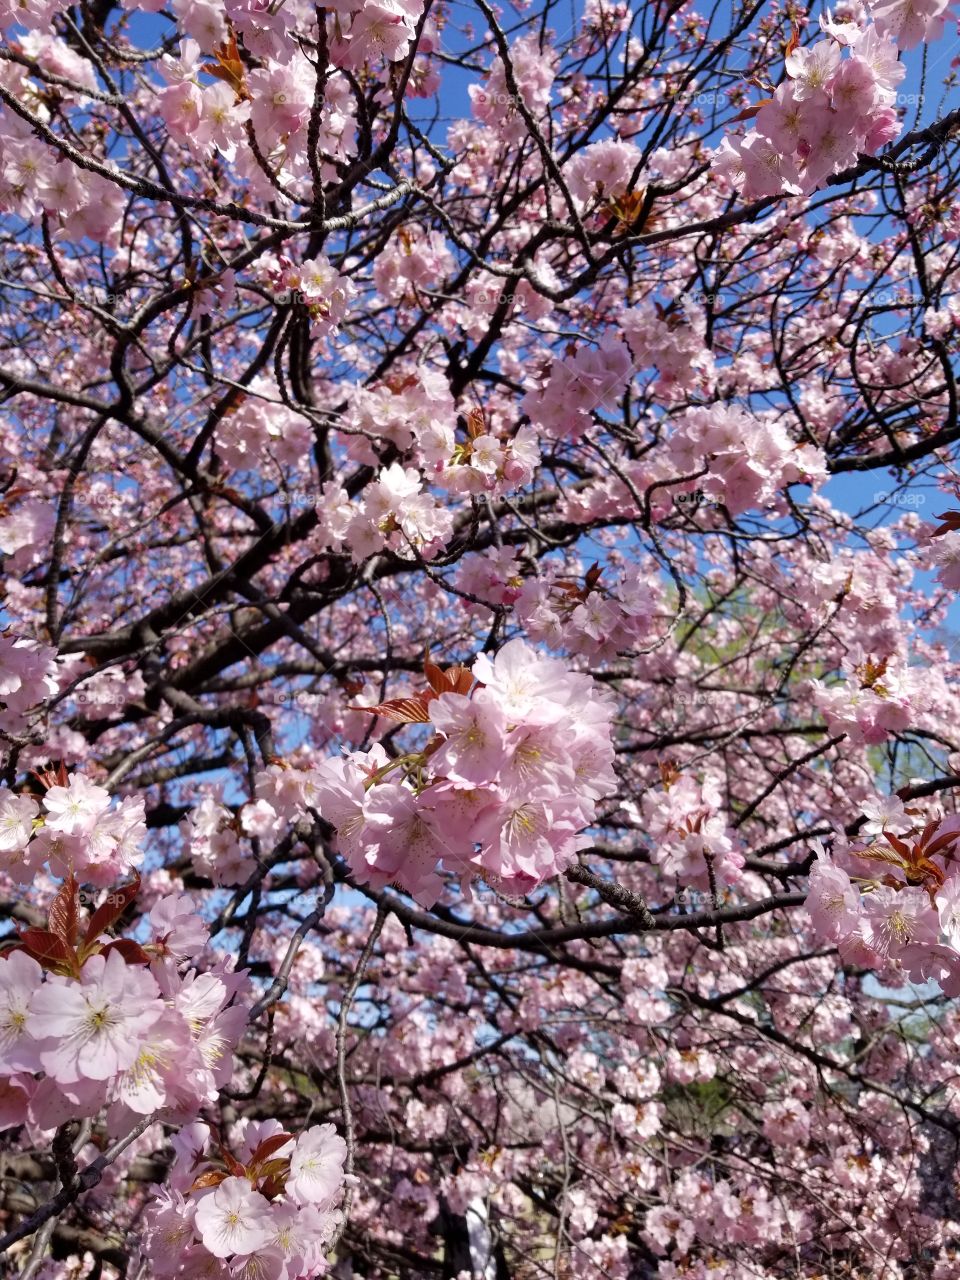 'Sakura' or Cherryblossoms in Tokyo's 'Hanami' or flower viewing season in Shinjuku Park.